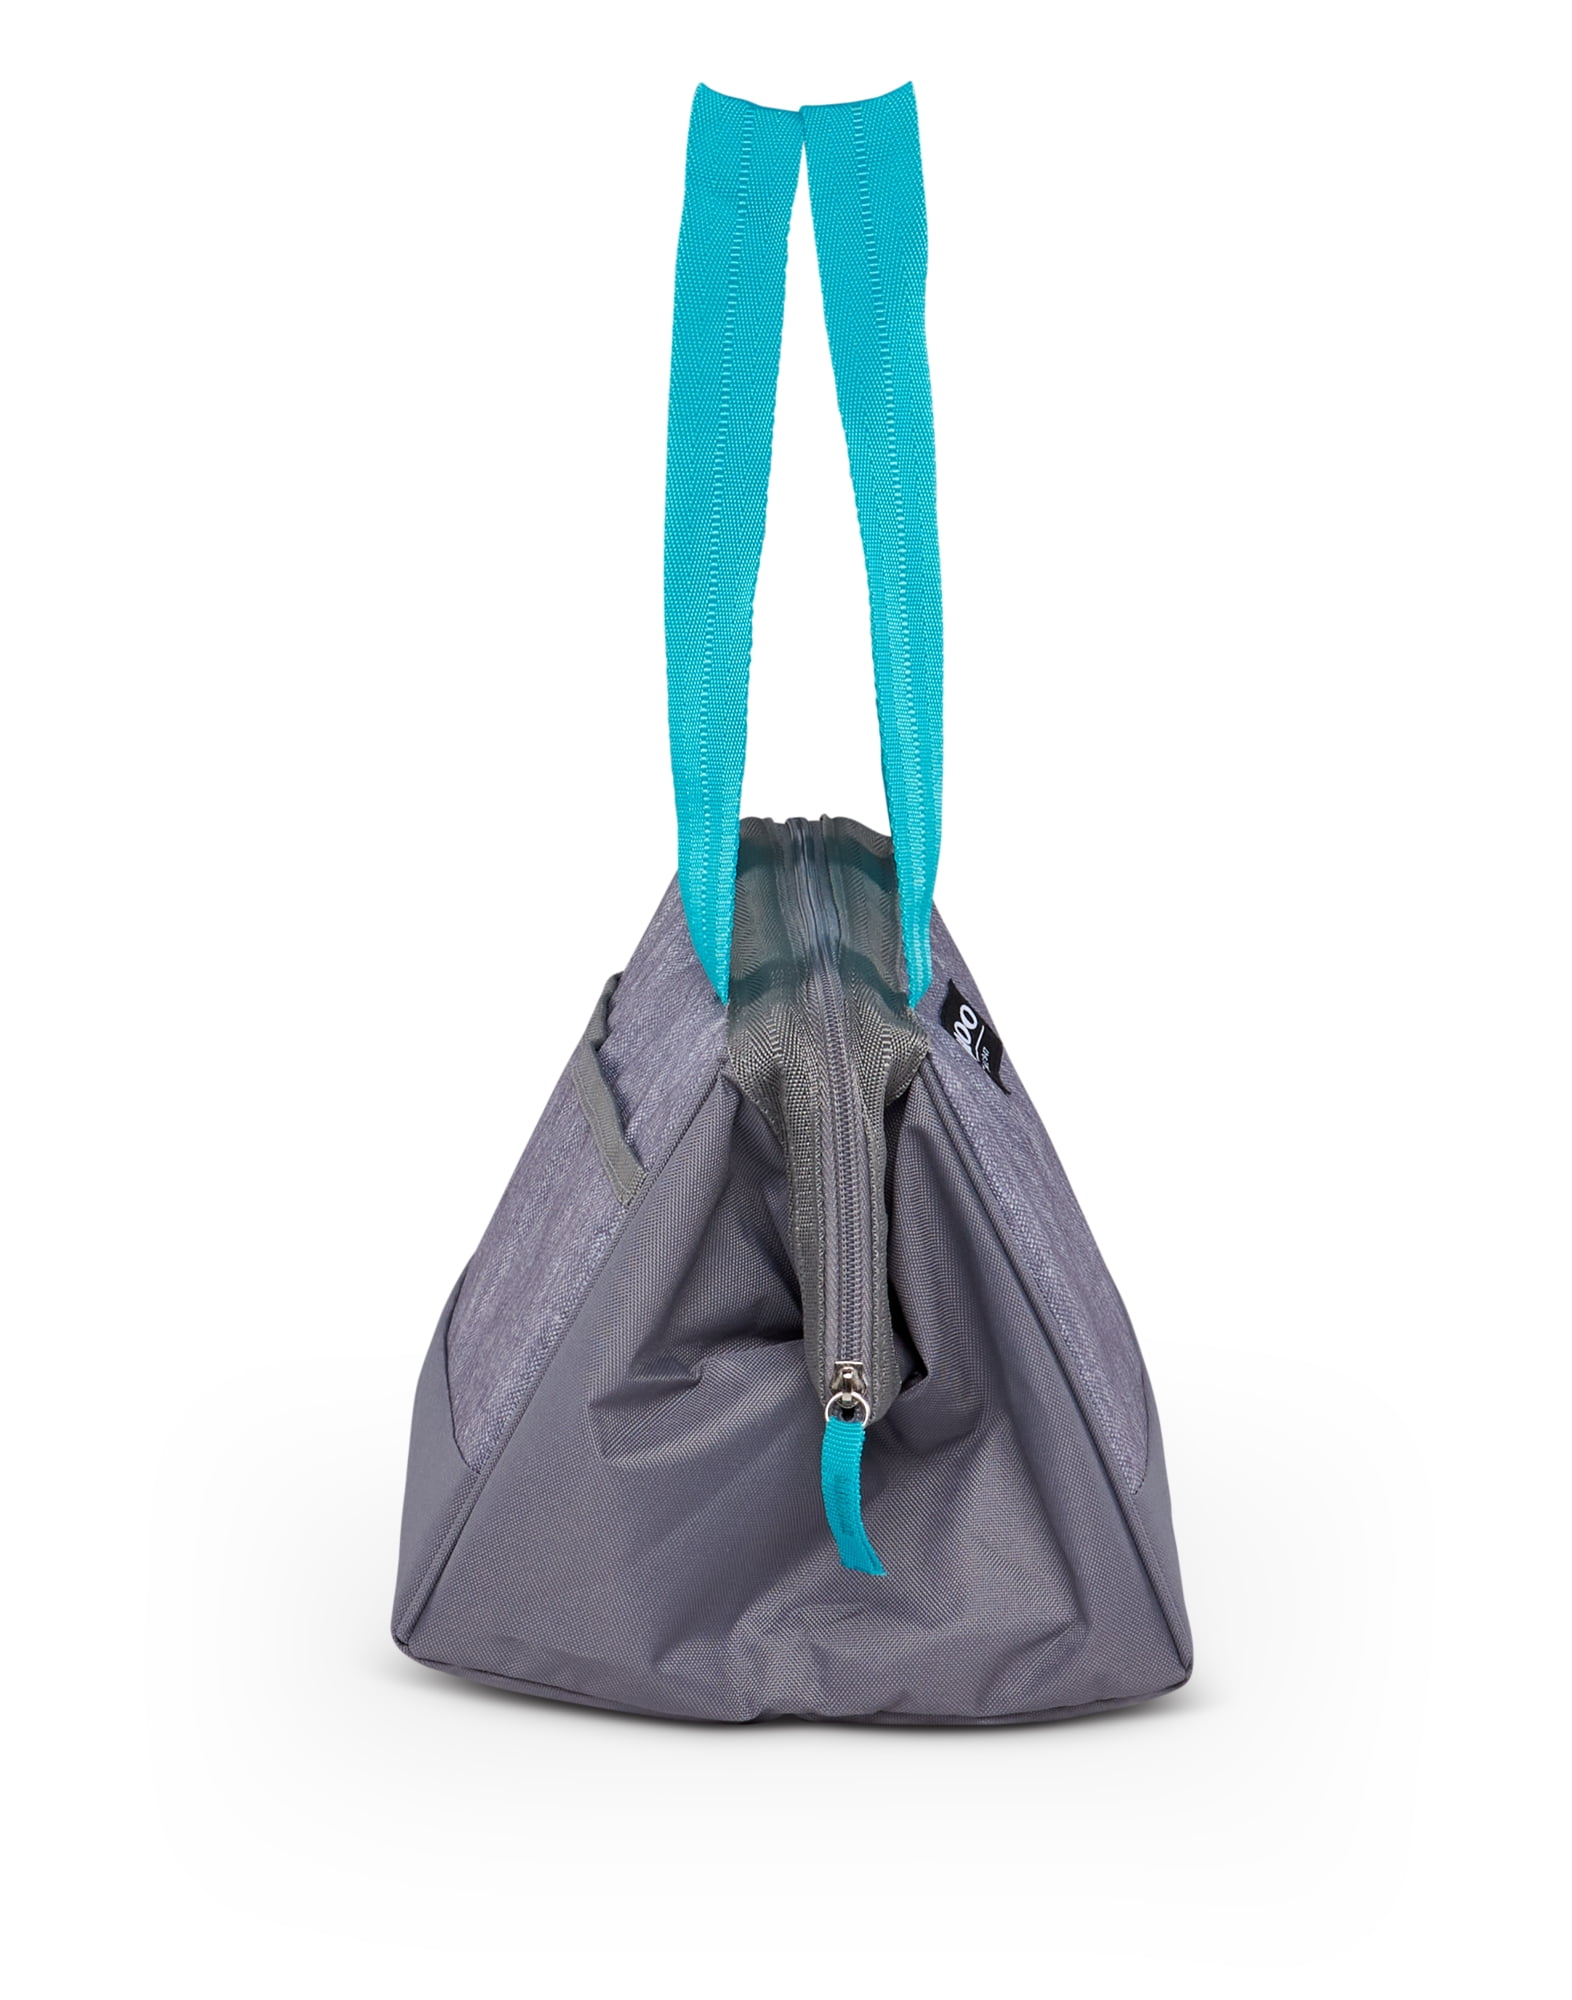 Save on Igloo Cooler Bag Leftover Tote Turquoise Order Online Delivery